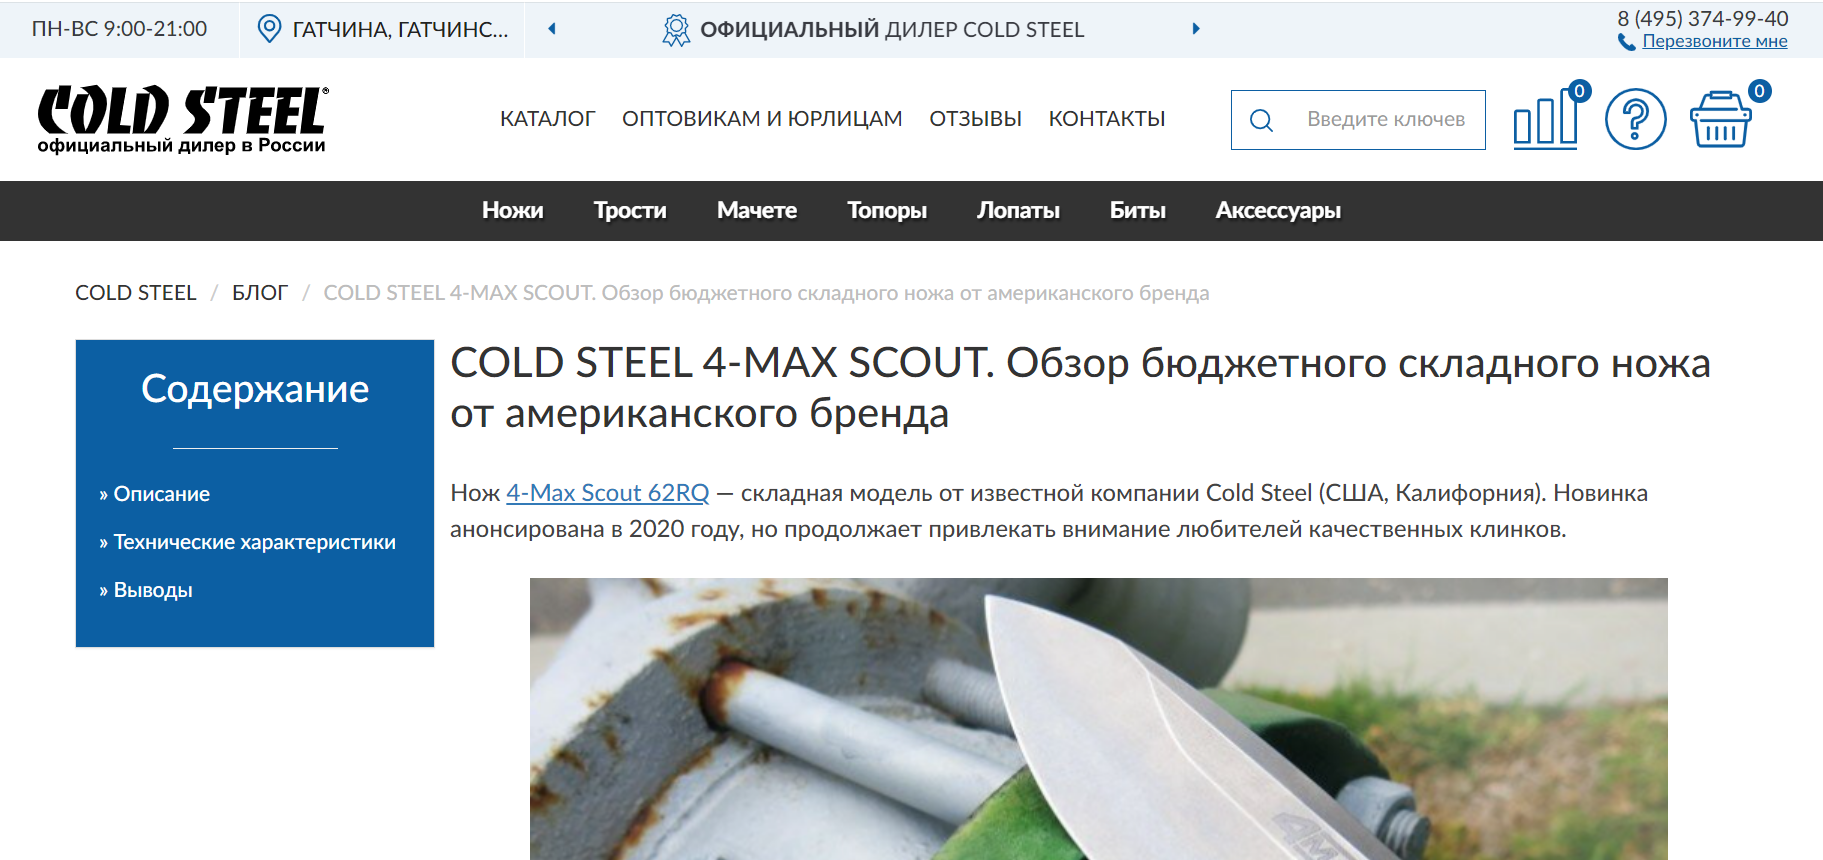 Cold Steel 4-Max Scout. Обзор бюджетного складного ножа от американского бренда